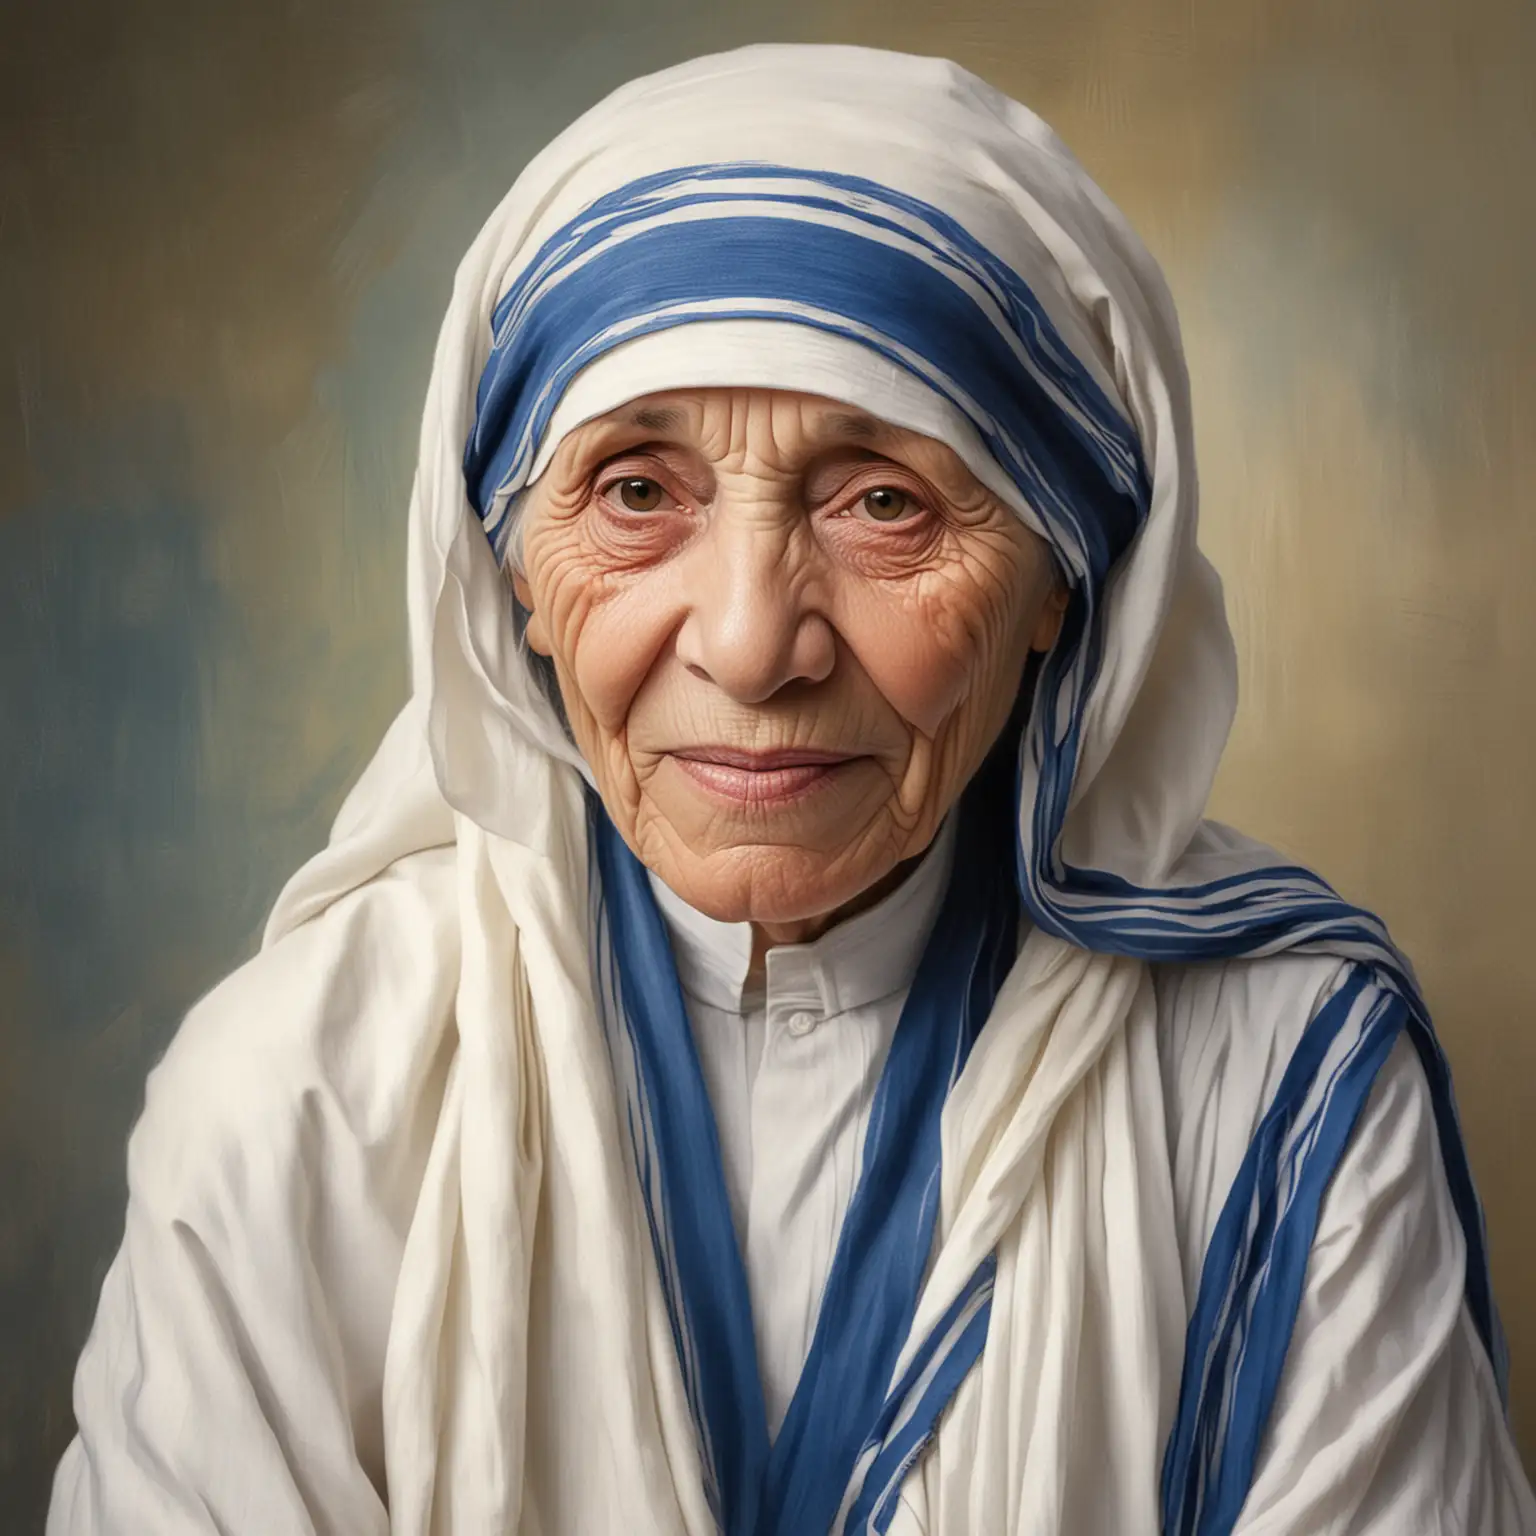 Mother Teresa Portrait of Compassion and Devotion